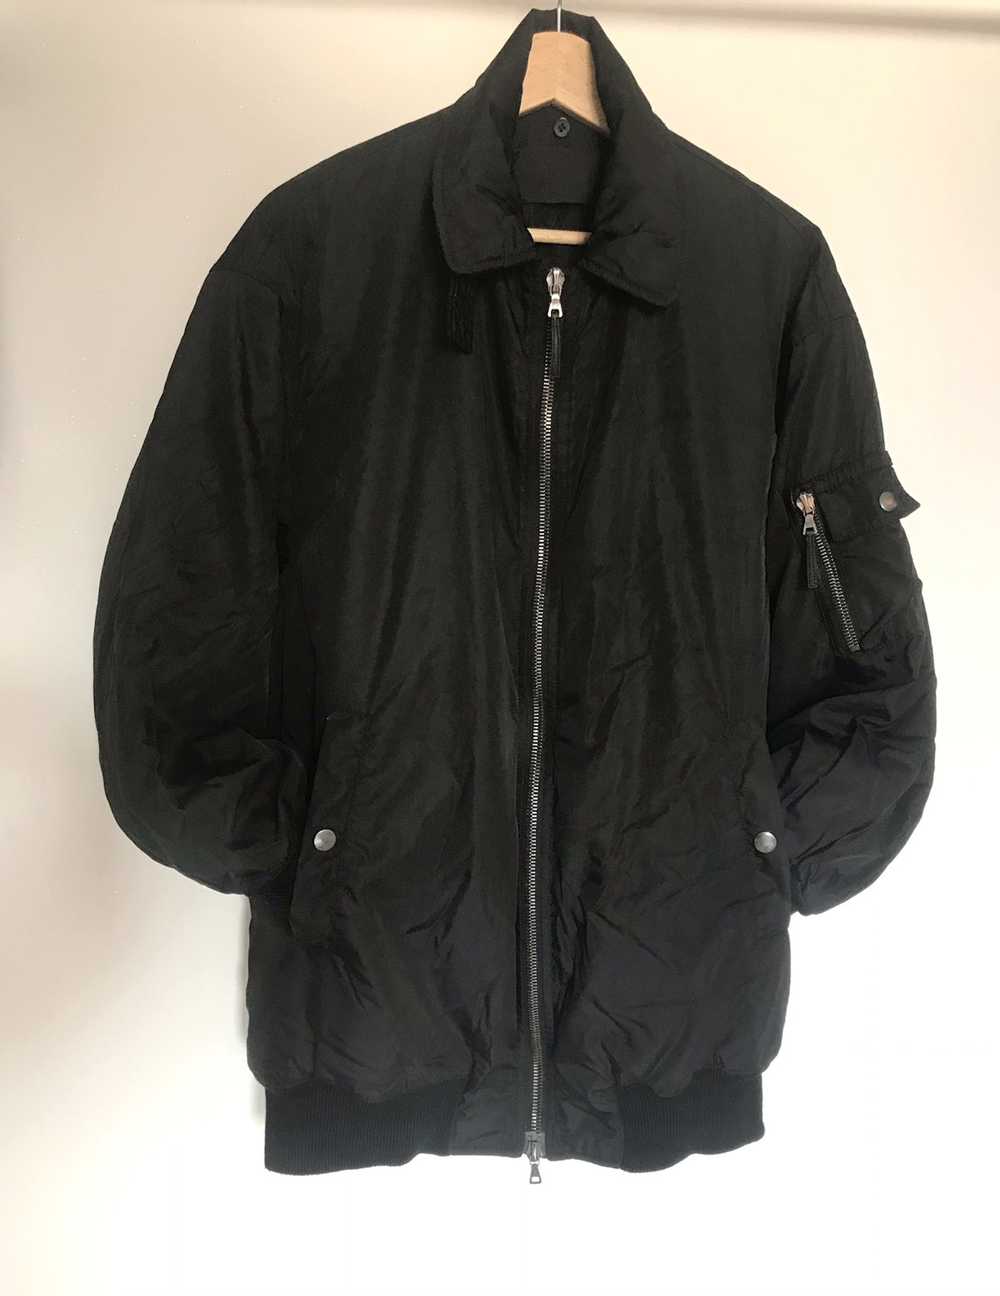 Prada Prada bomber jacket - image 1